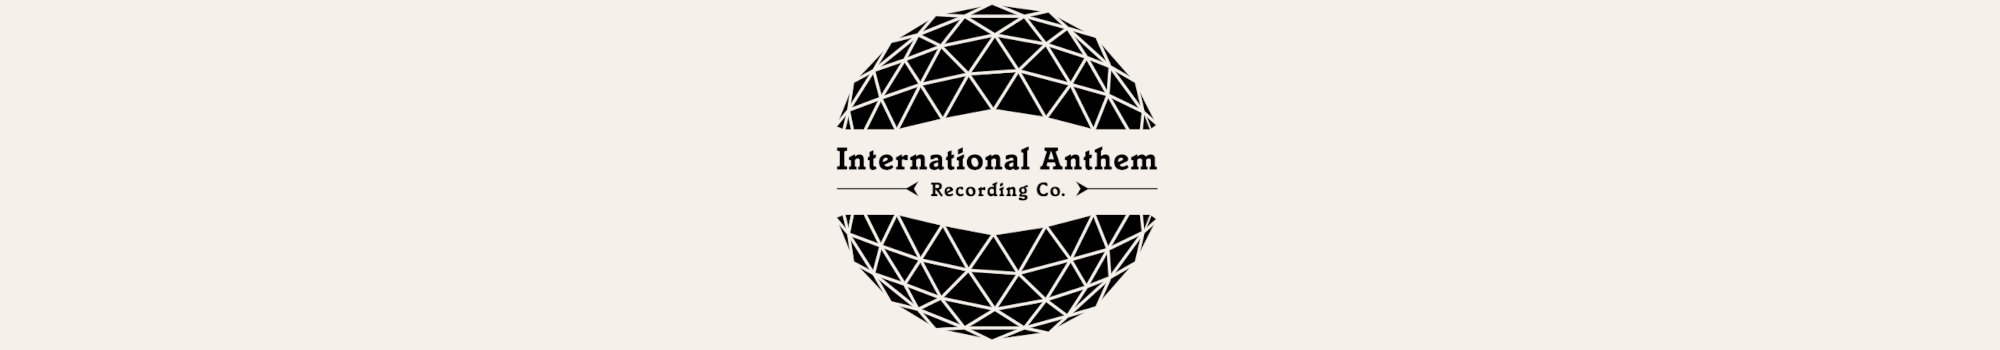 International Anthem Records